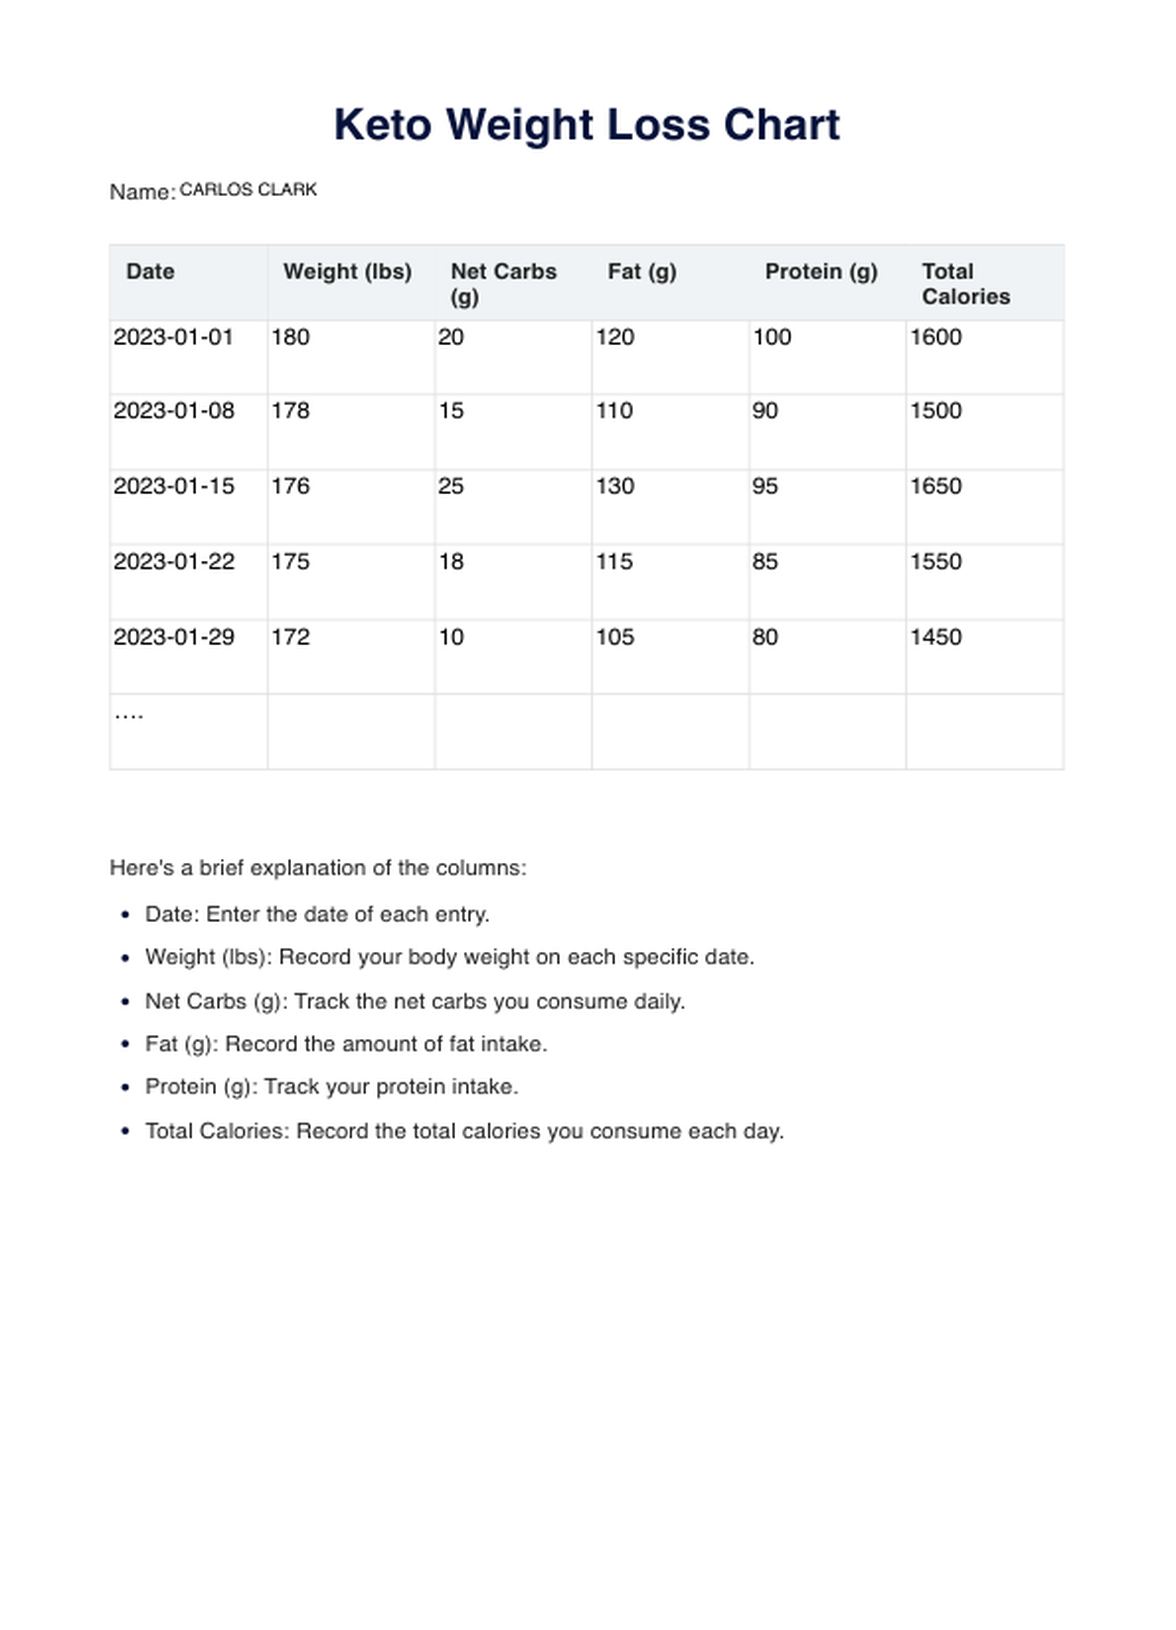 Keto Weight Loss Chart PDF Example